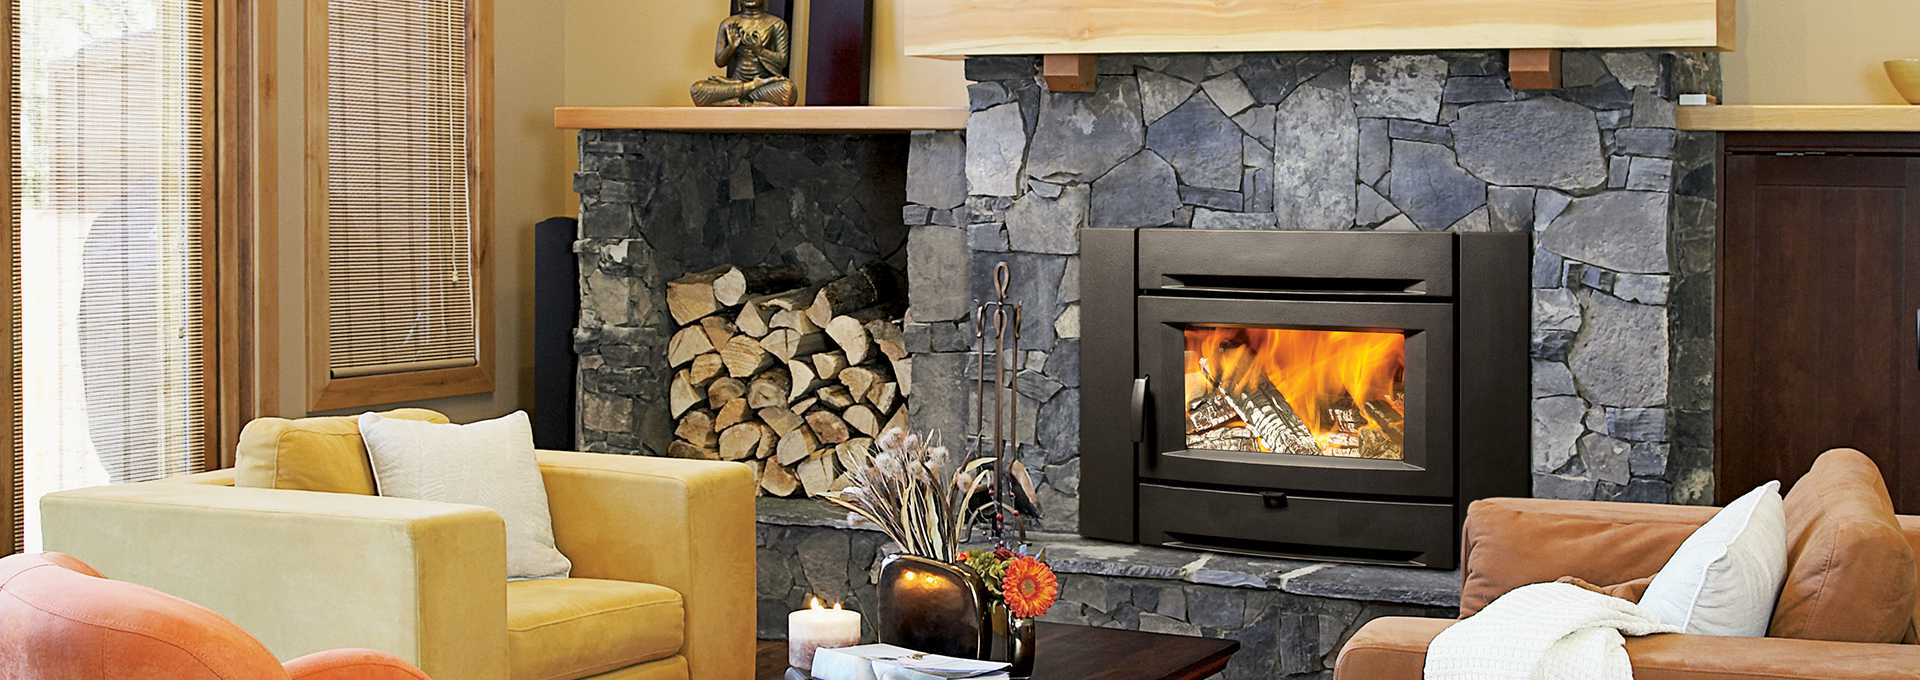 Fall Fireplace Maintenance & Decorating Tips  